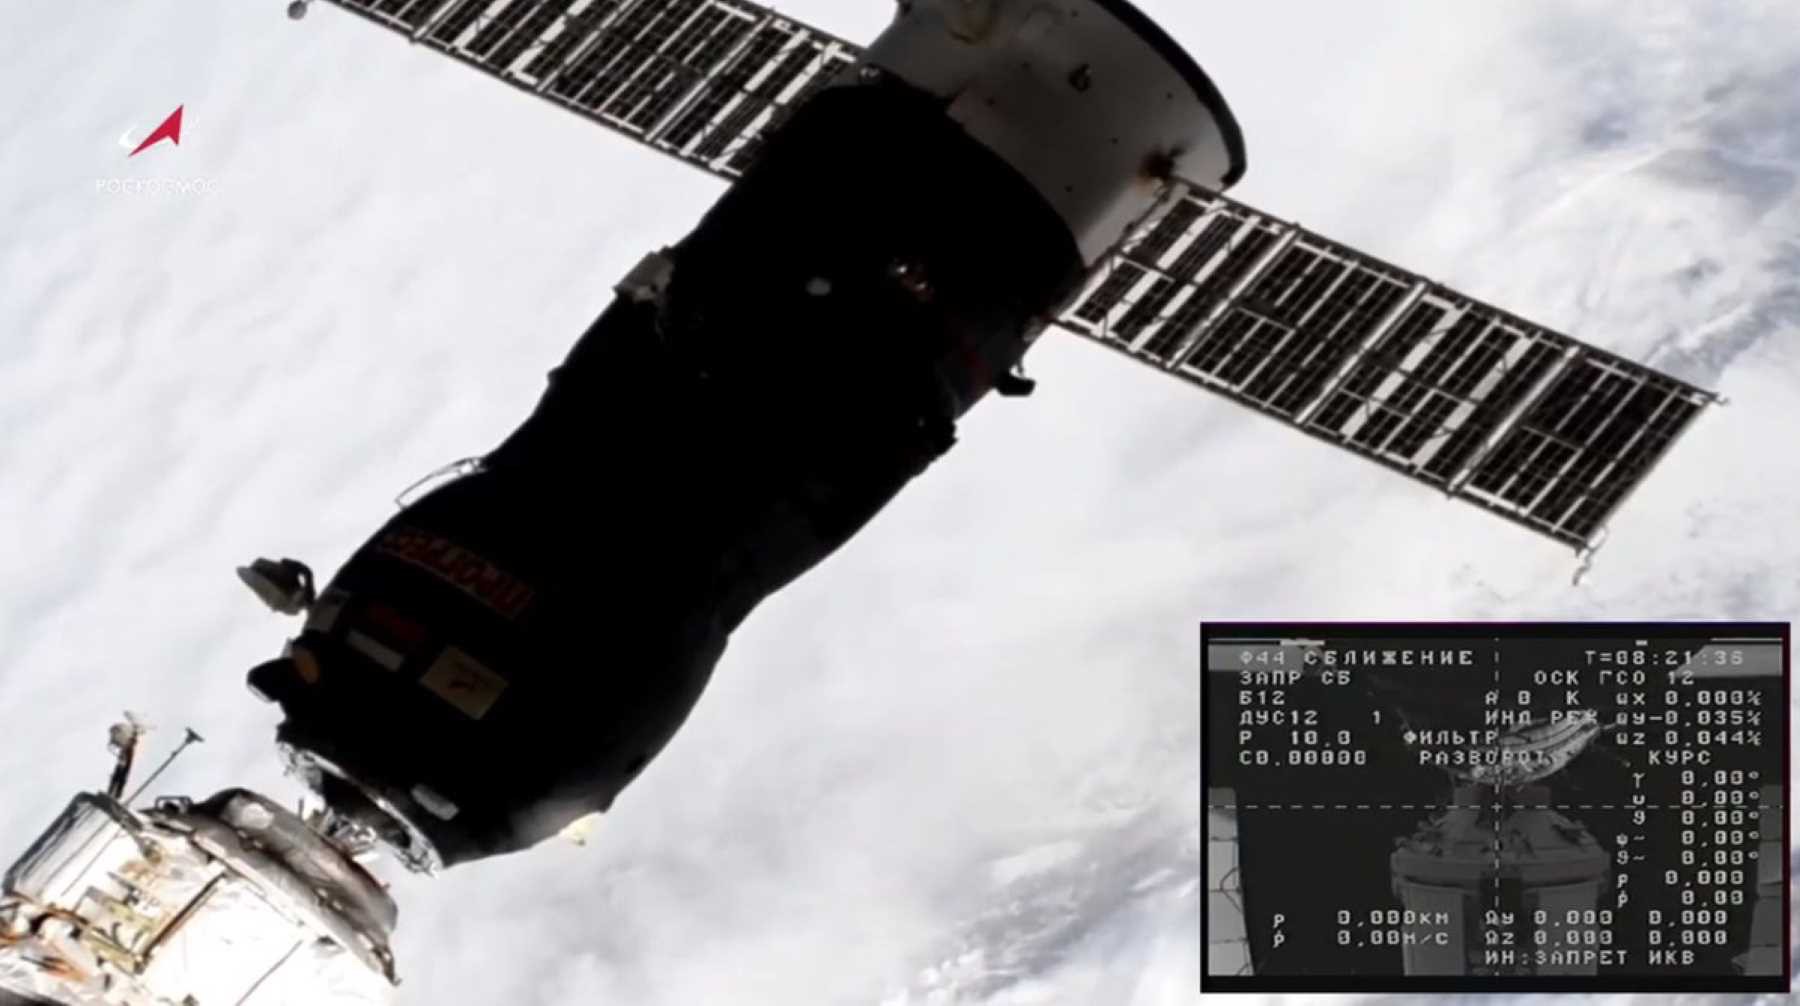 Dailystorm - На МКС просверлят корпус российского модуля для остановки утечки воздуха